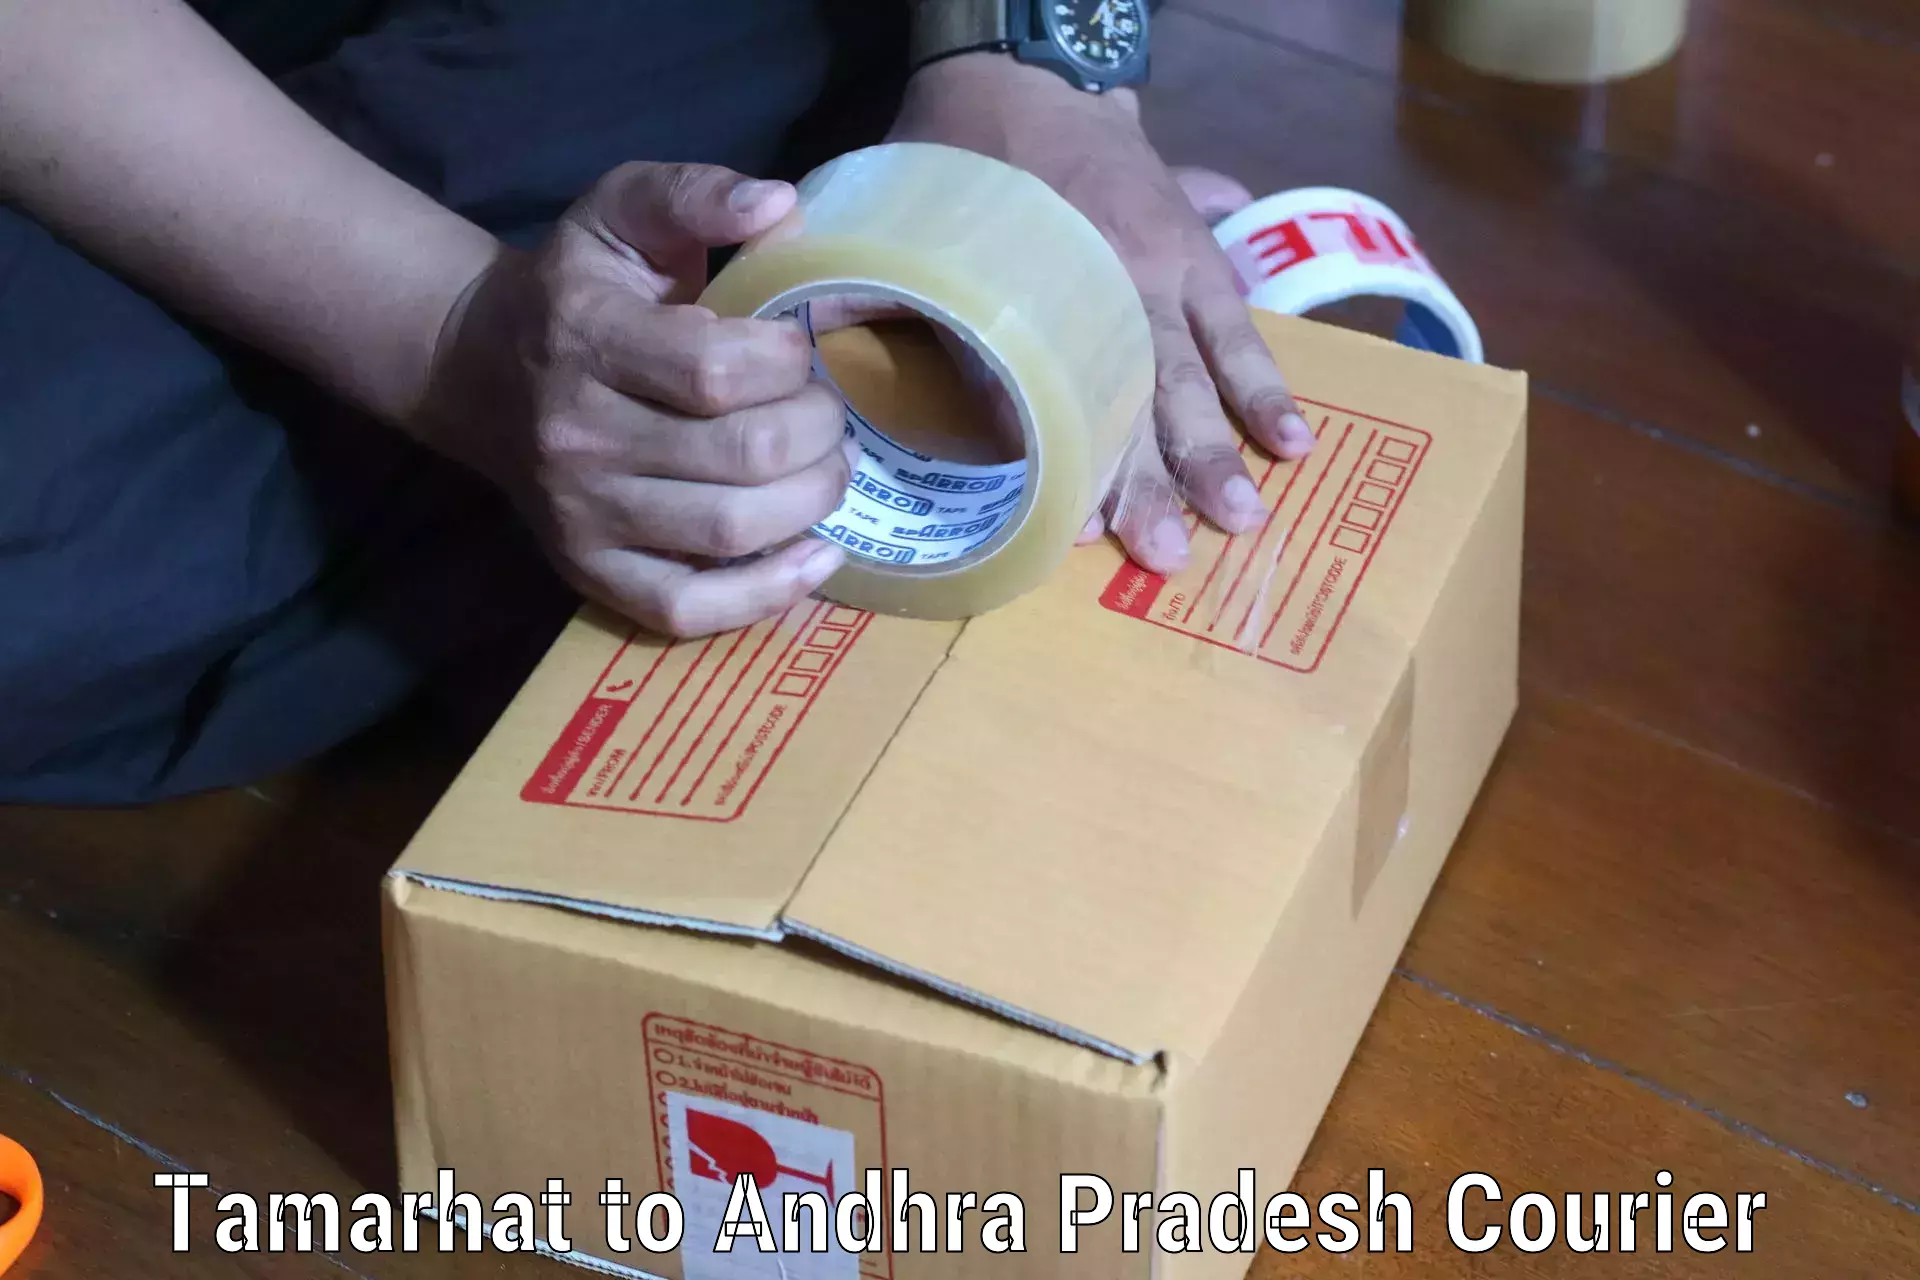 Professional courier handling Tamarhat to Chitrada